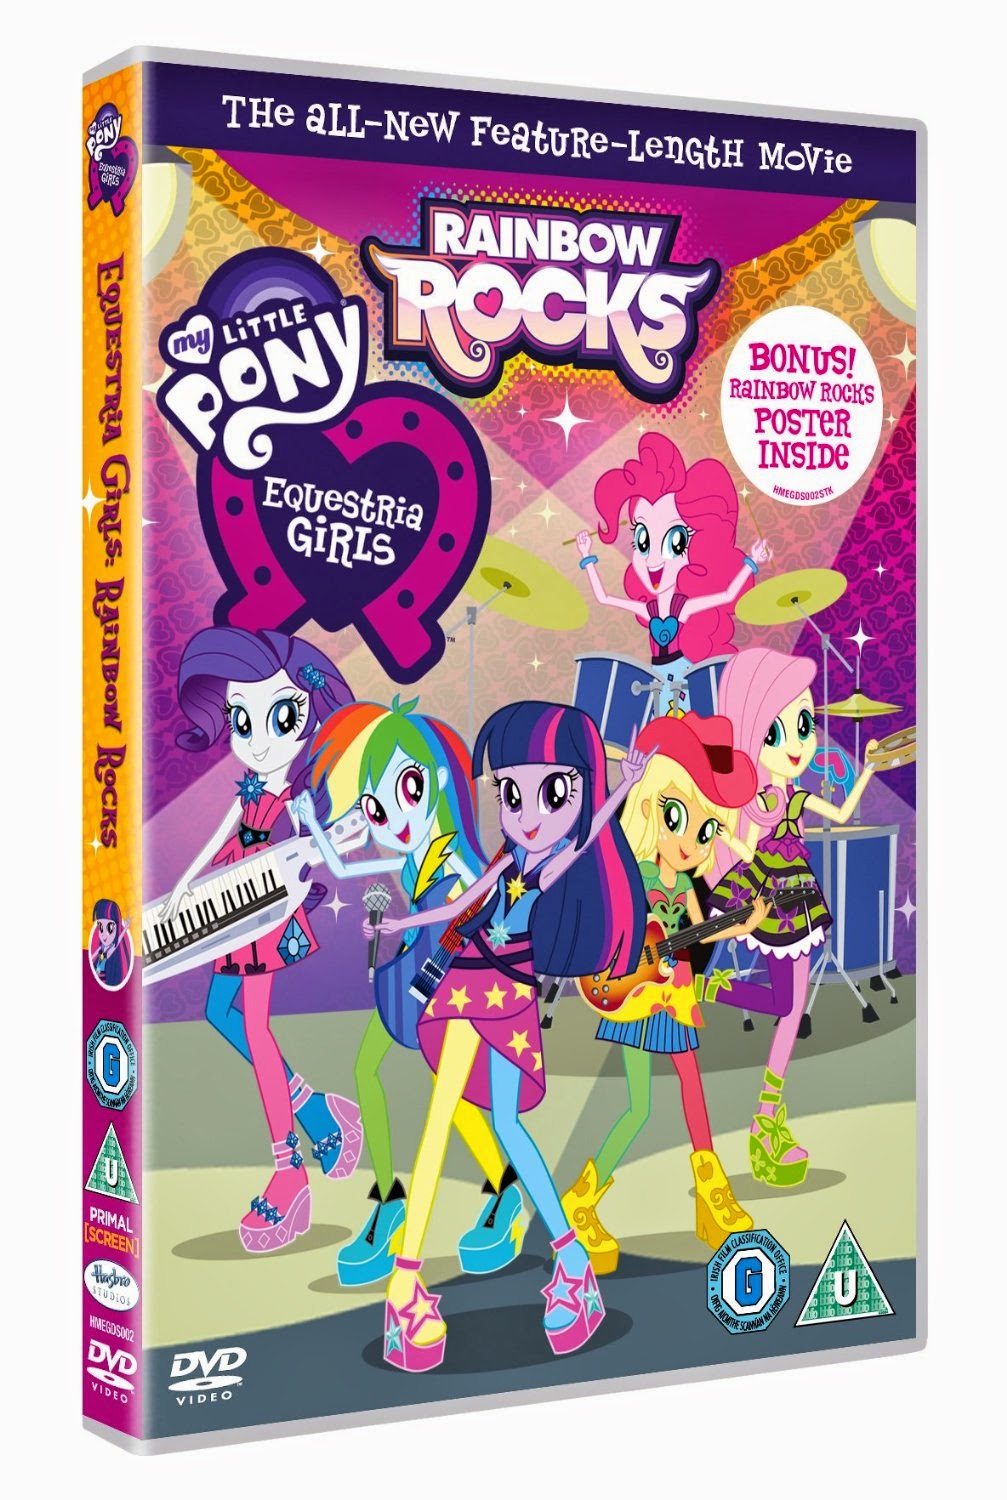 My Mummy's Pennies: MLP Equestria Girls: Rainbow Rocks Activity Sheet & DVD  Giveaway!